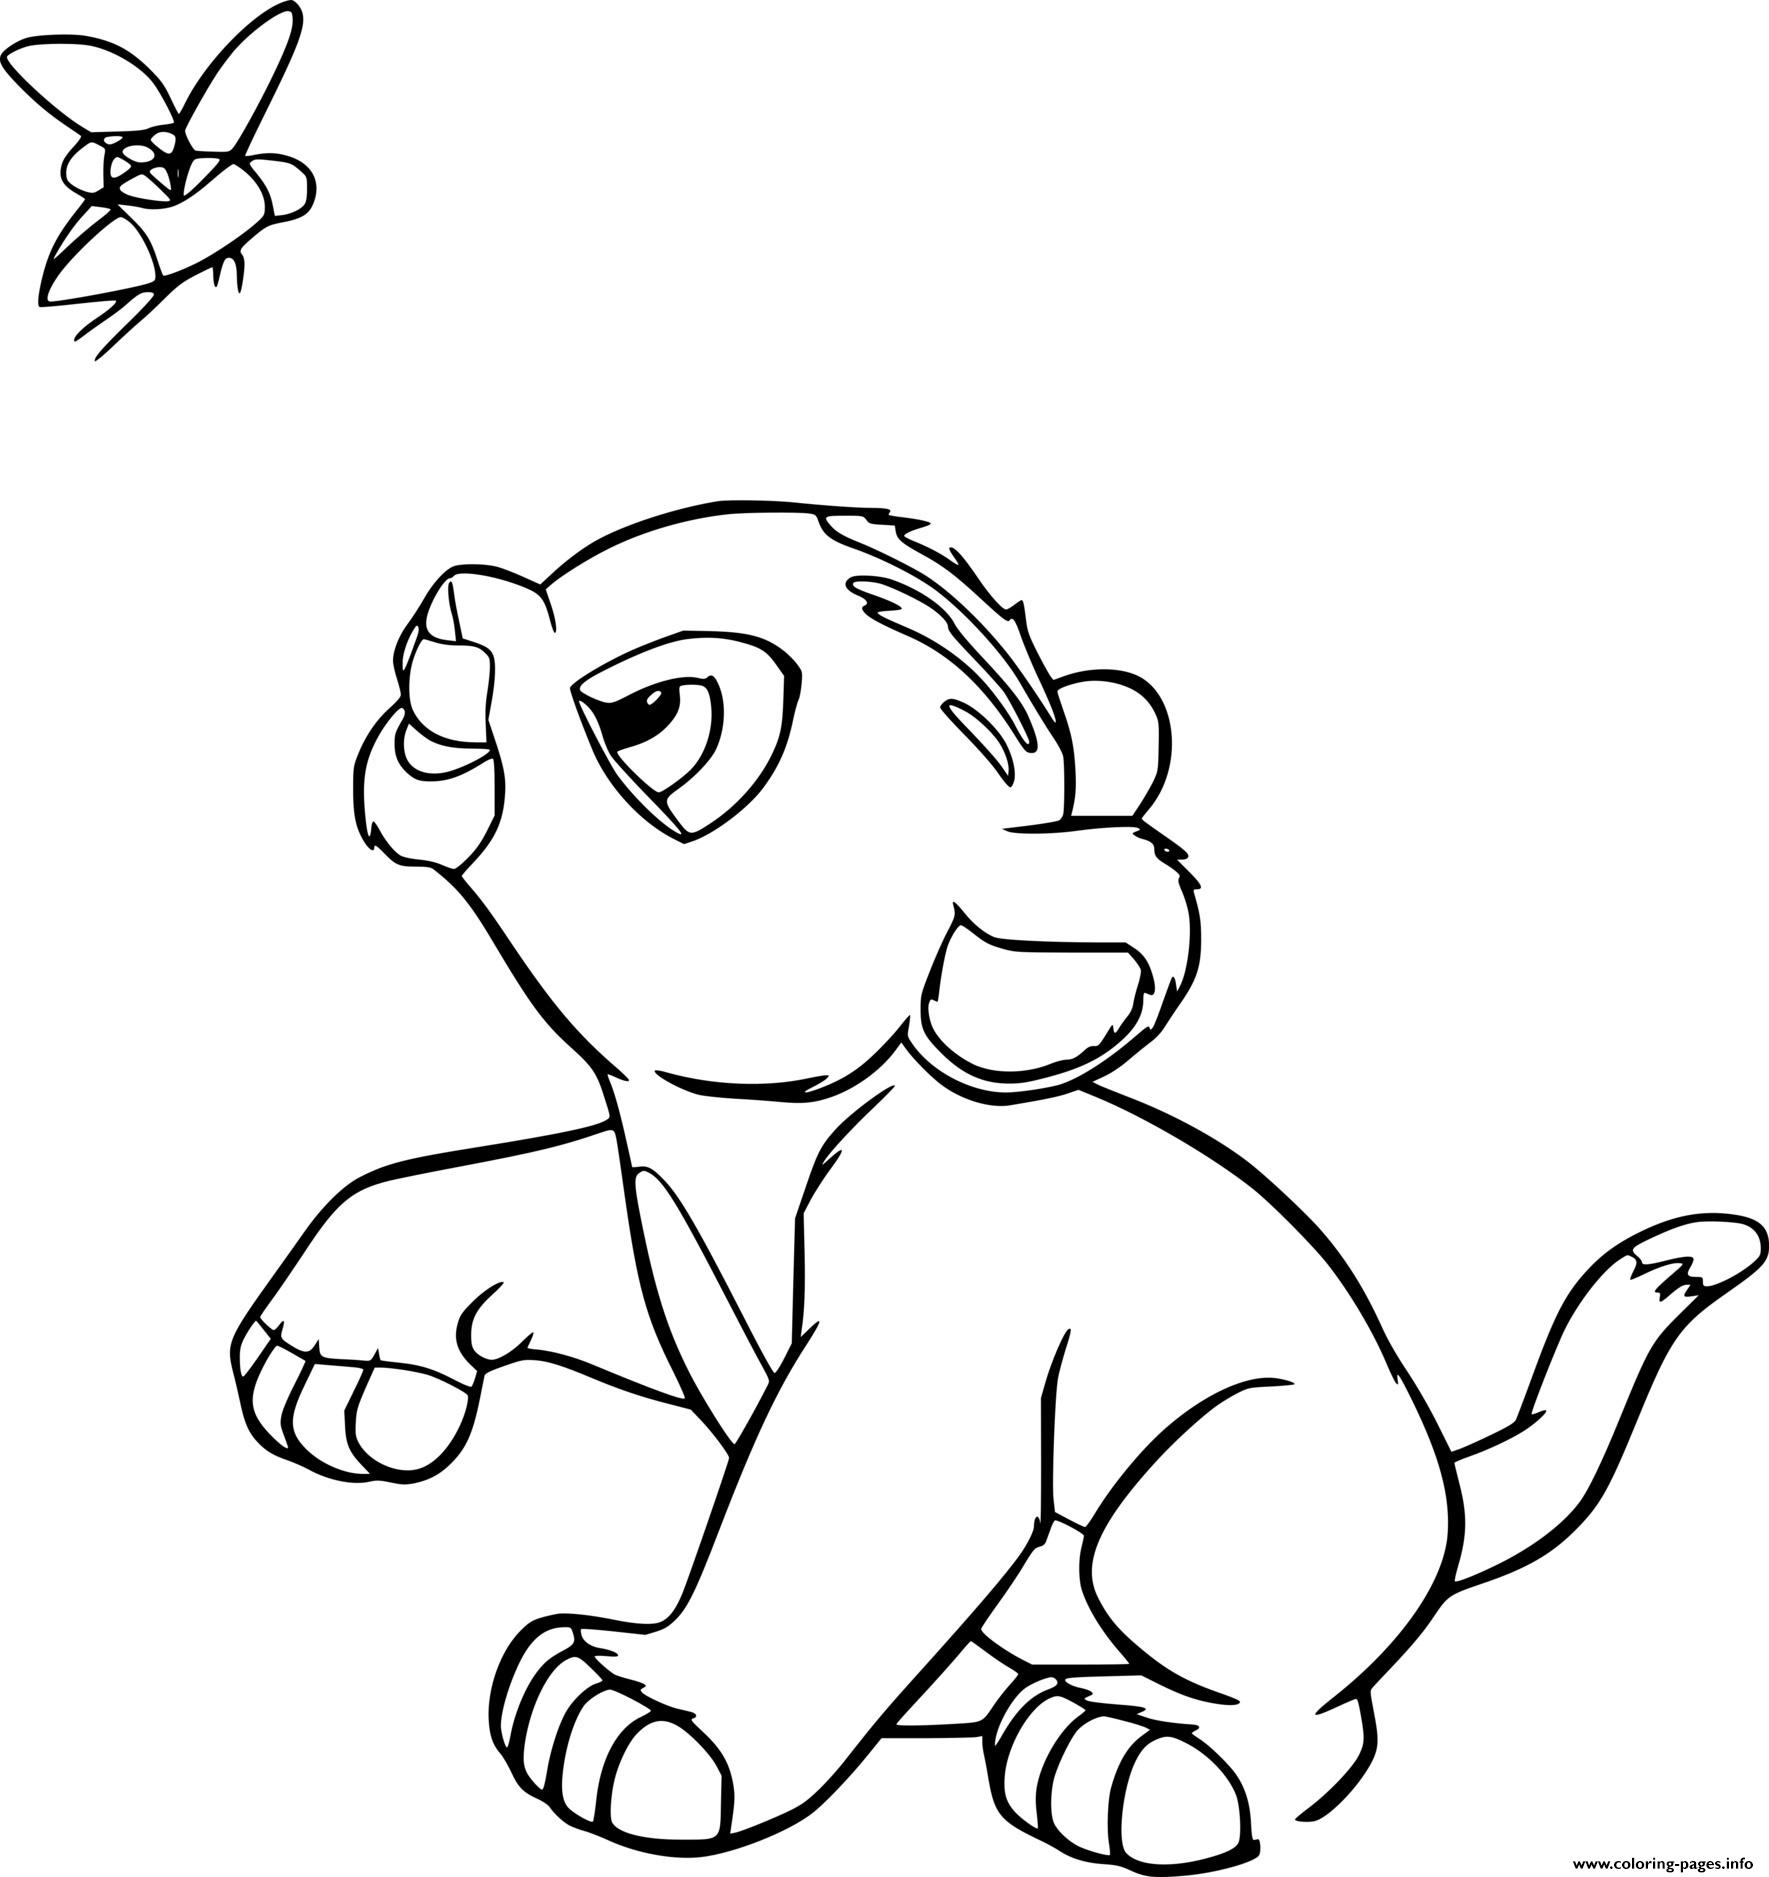 Baby Simba Chasing A Bug coloring